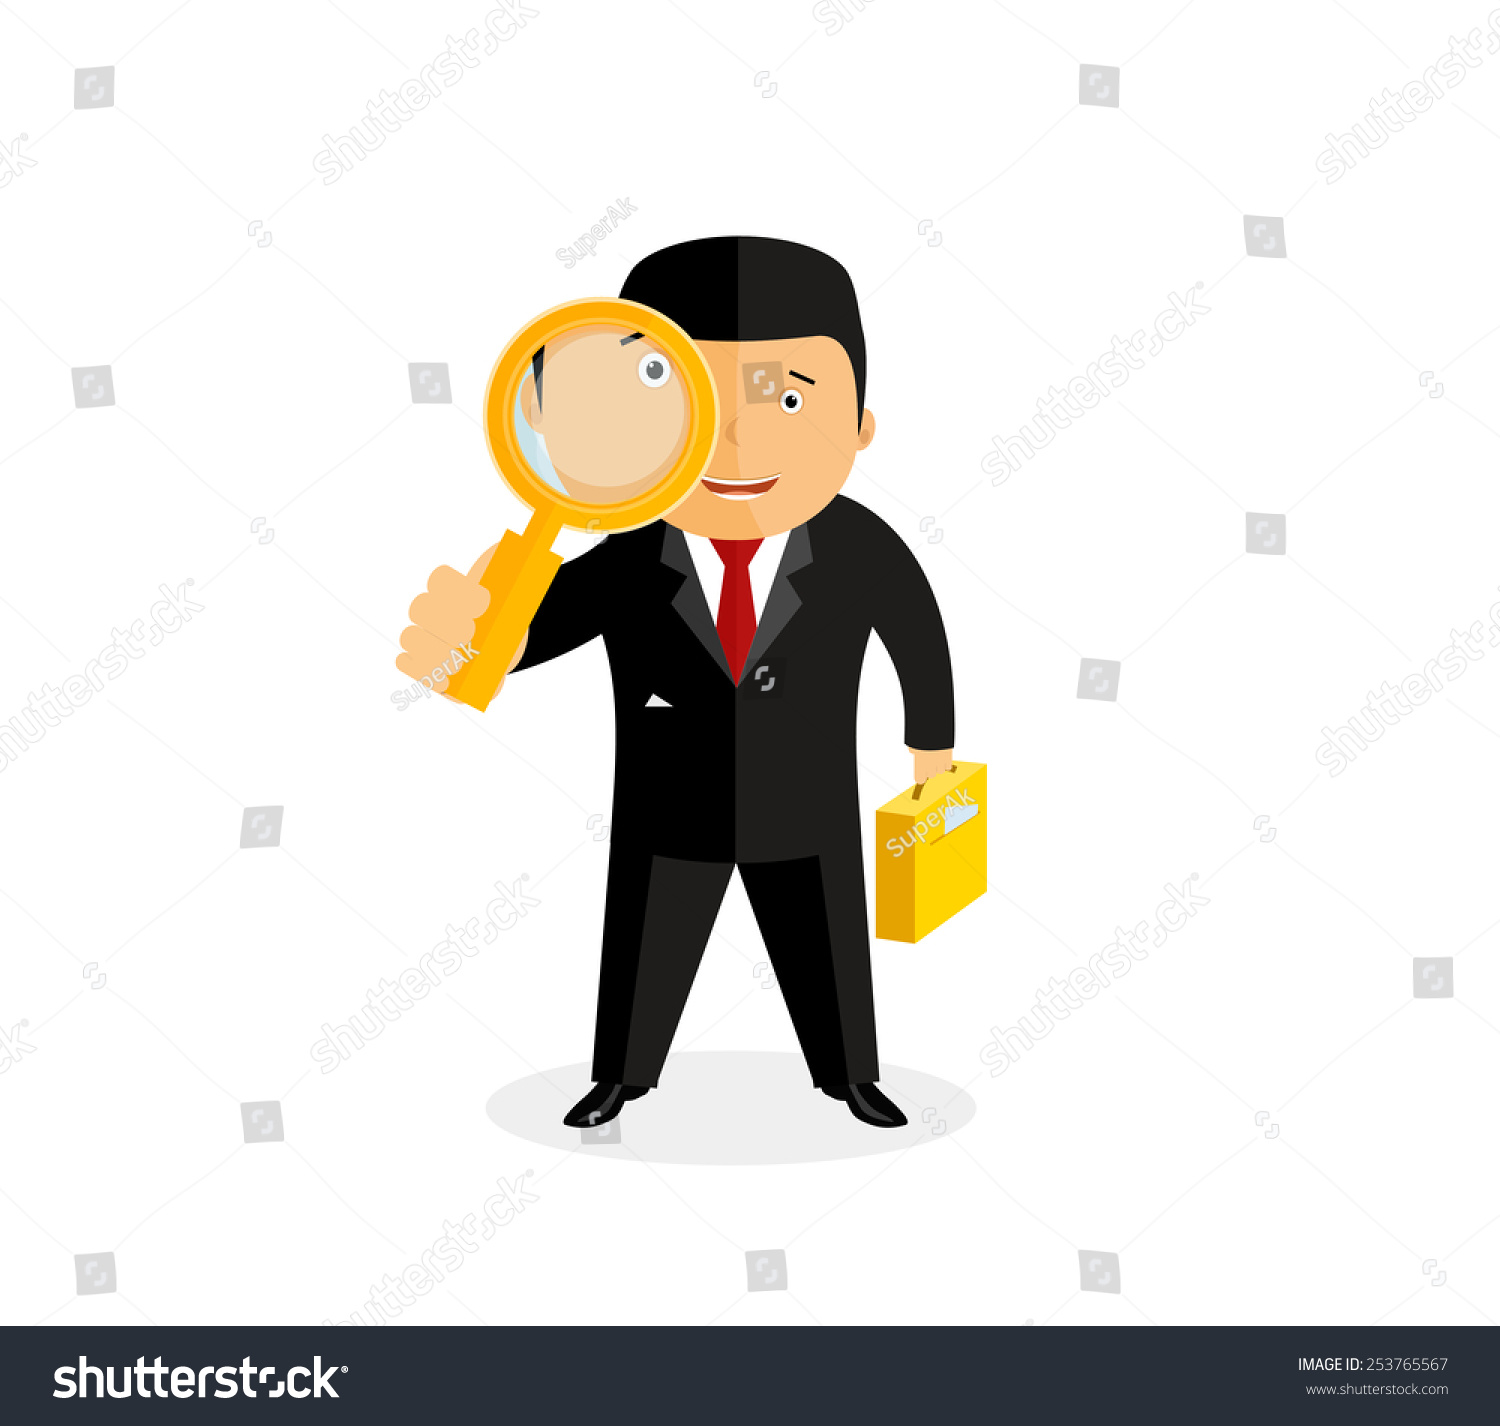 Businessman, Manager, Vector Illustration - 253765567 : Shutterstock